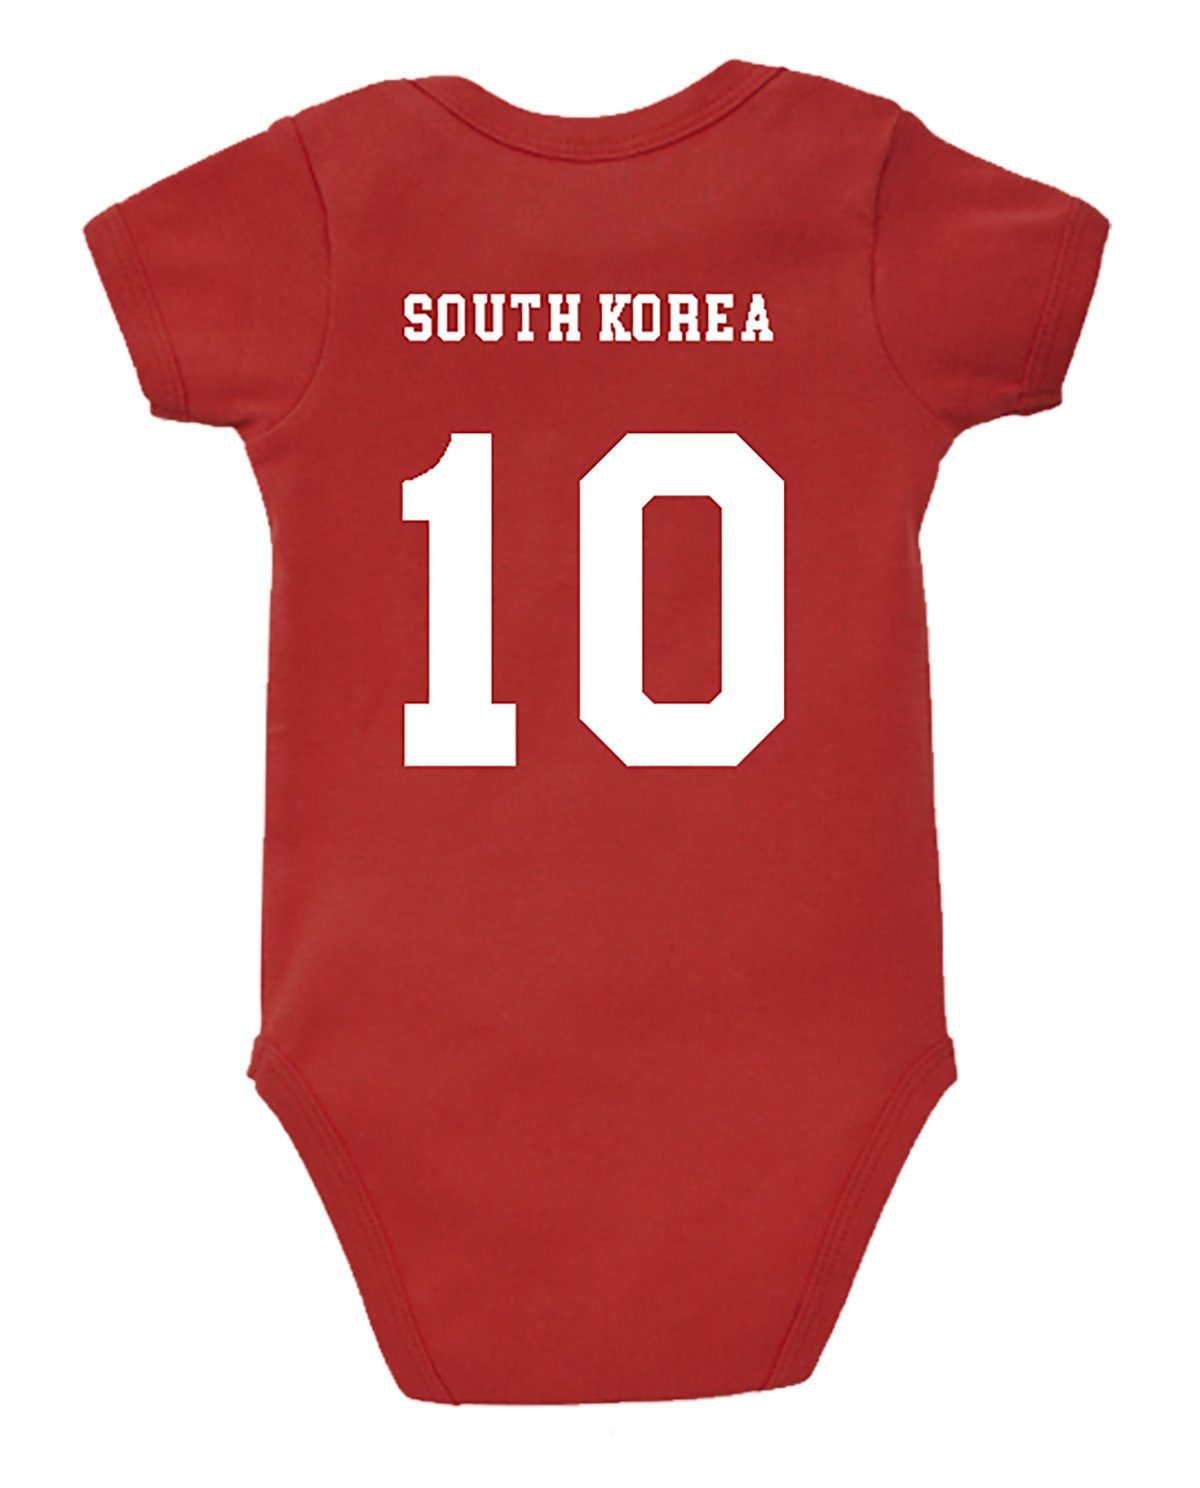 Südkorea Designz Youth mit Kurzarmbody trendigem Kinder Baby Motiv Body Strampler